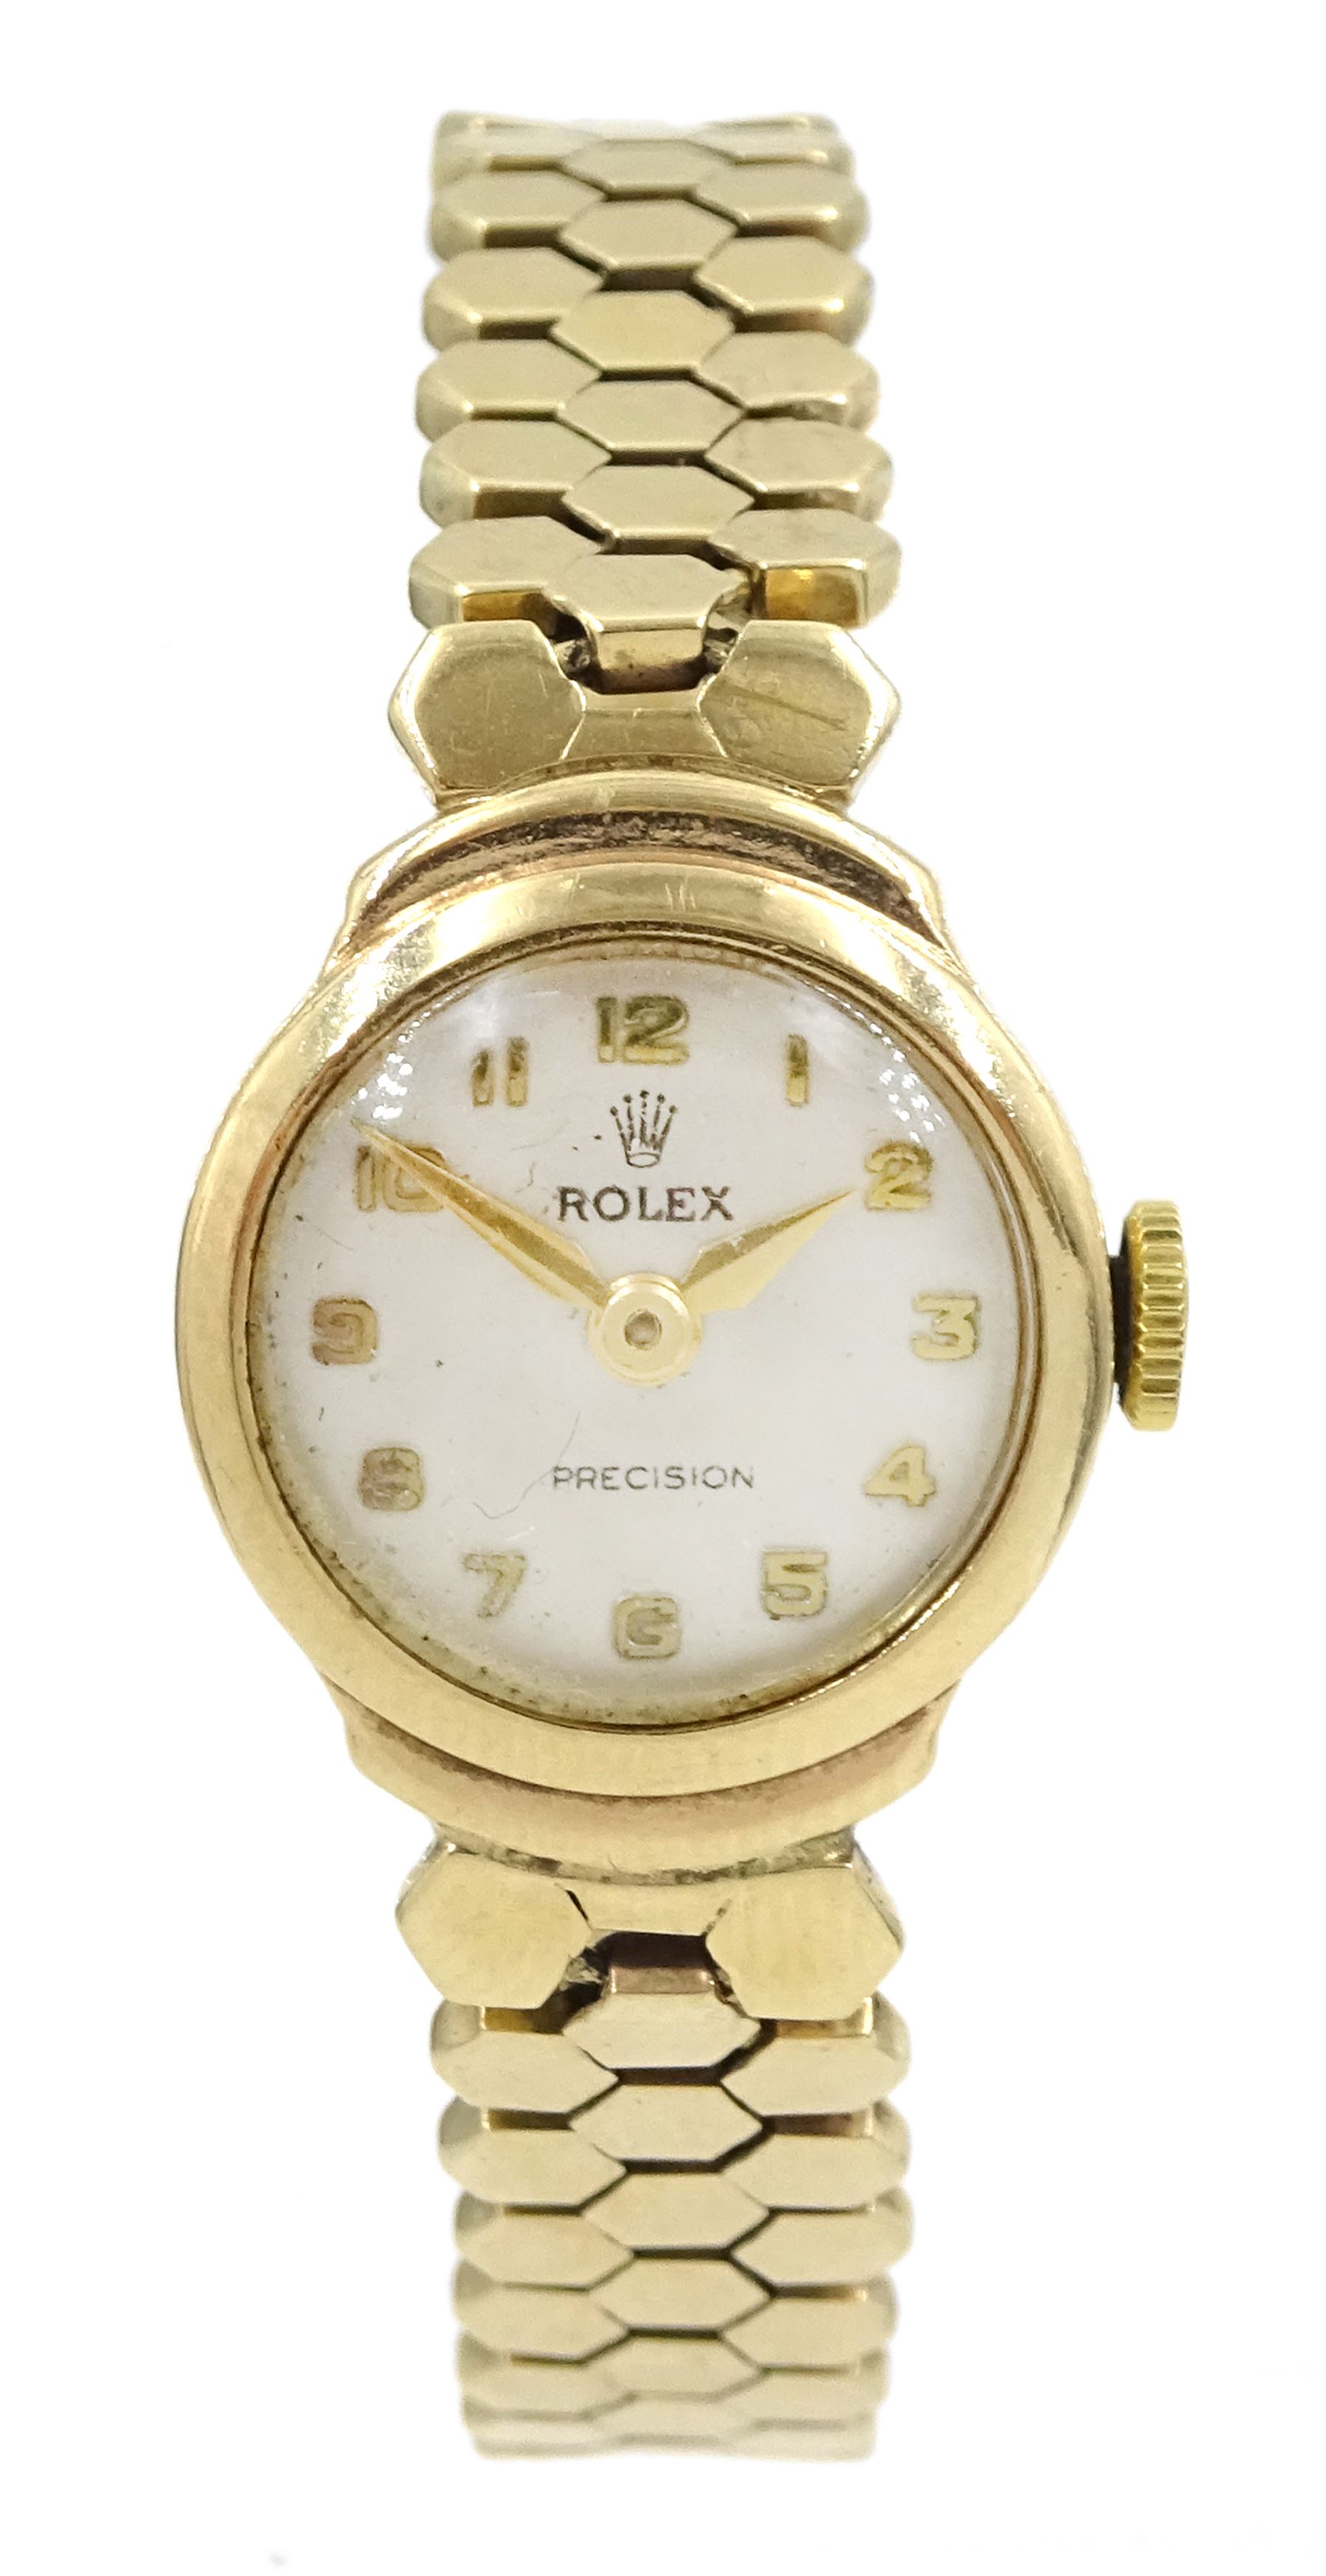 Rolex Precision 9ct gold ladies manual wind wristwatch